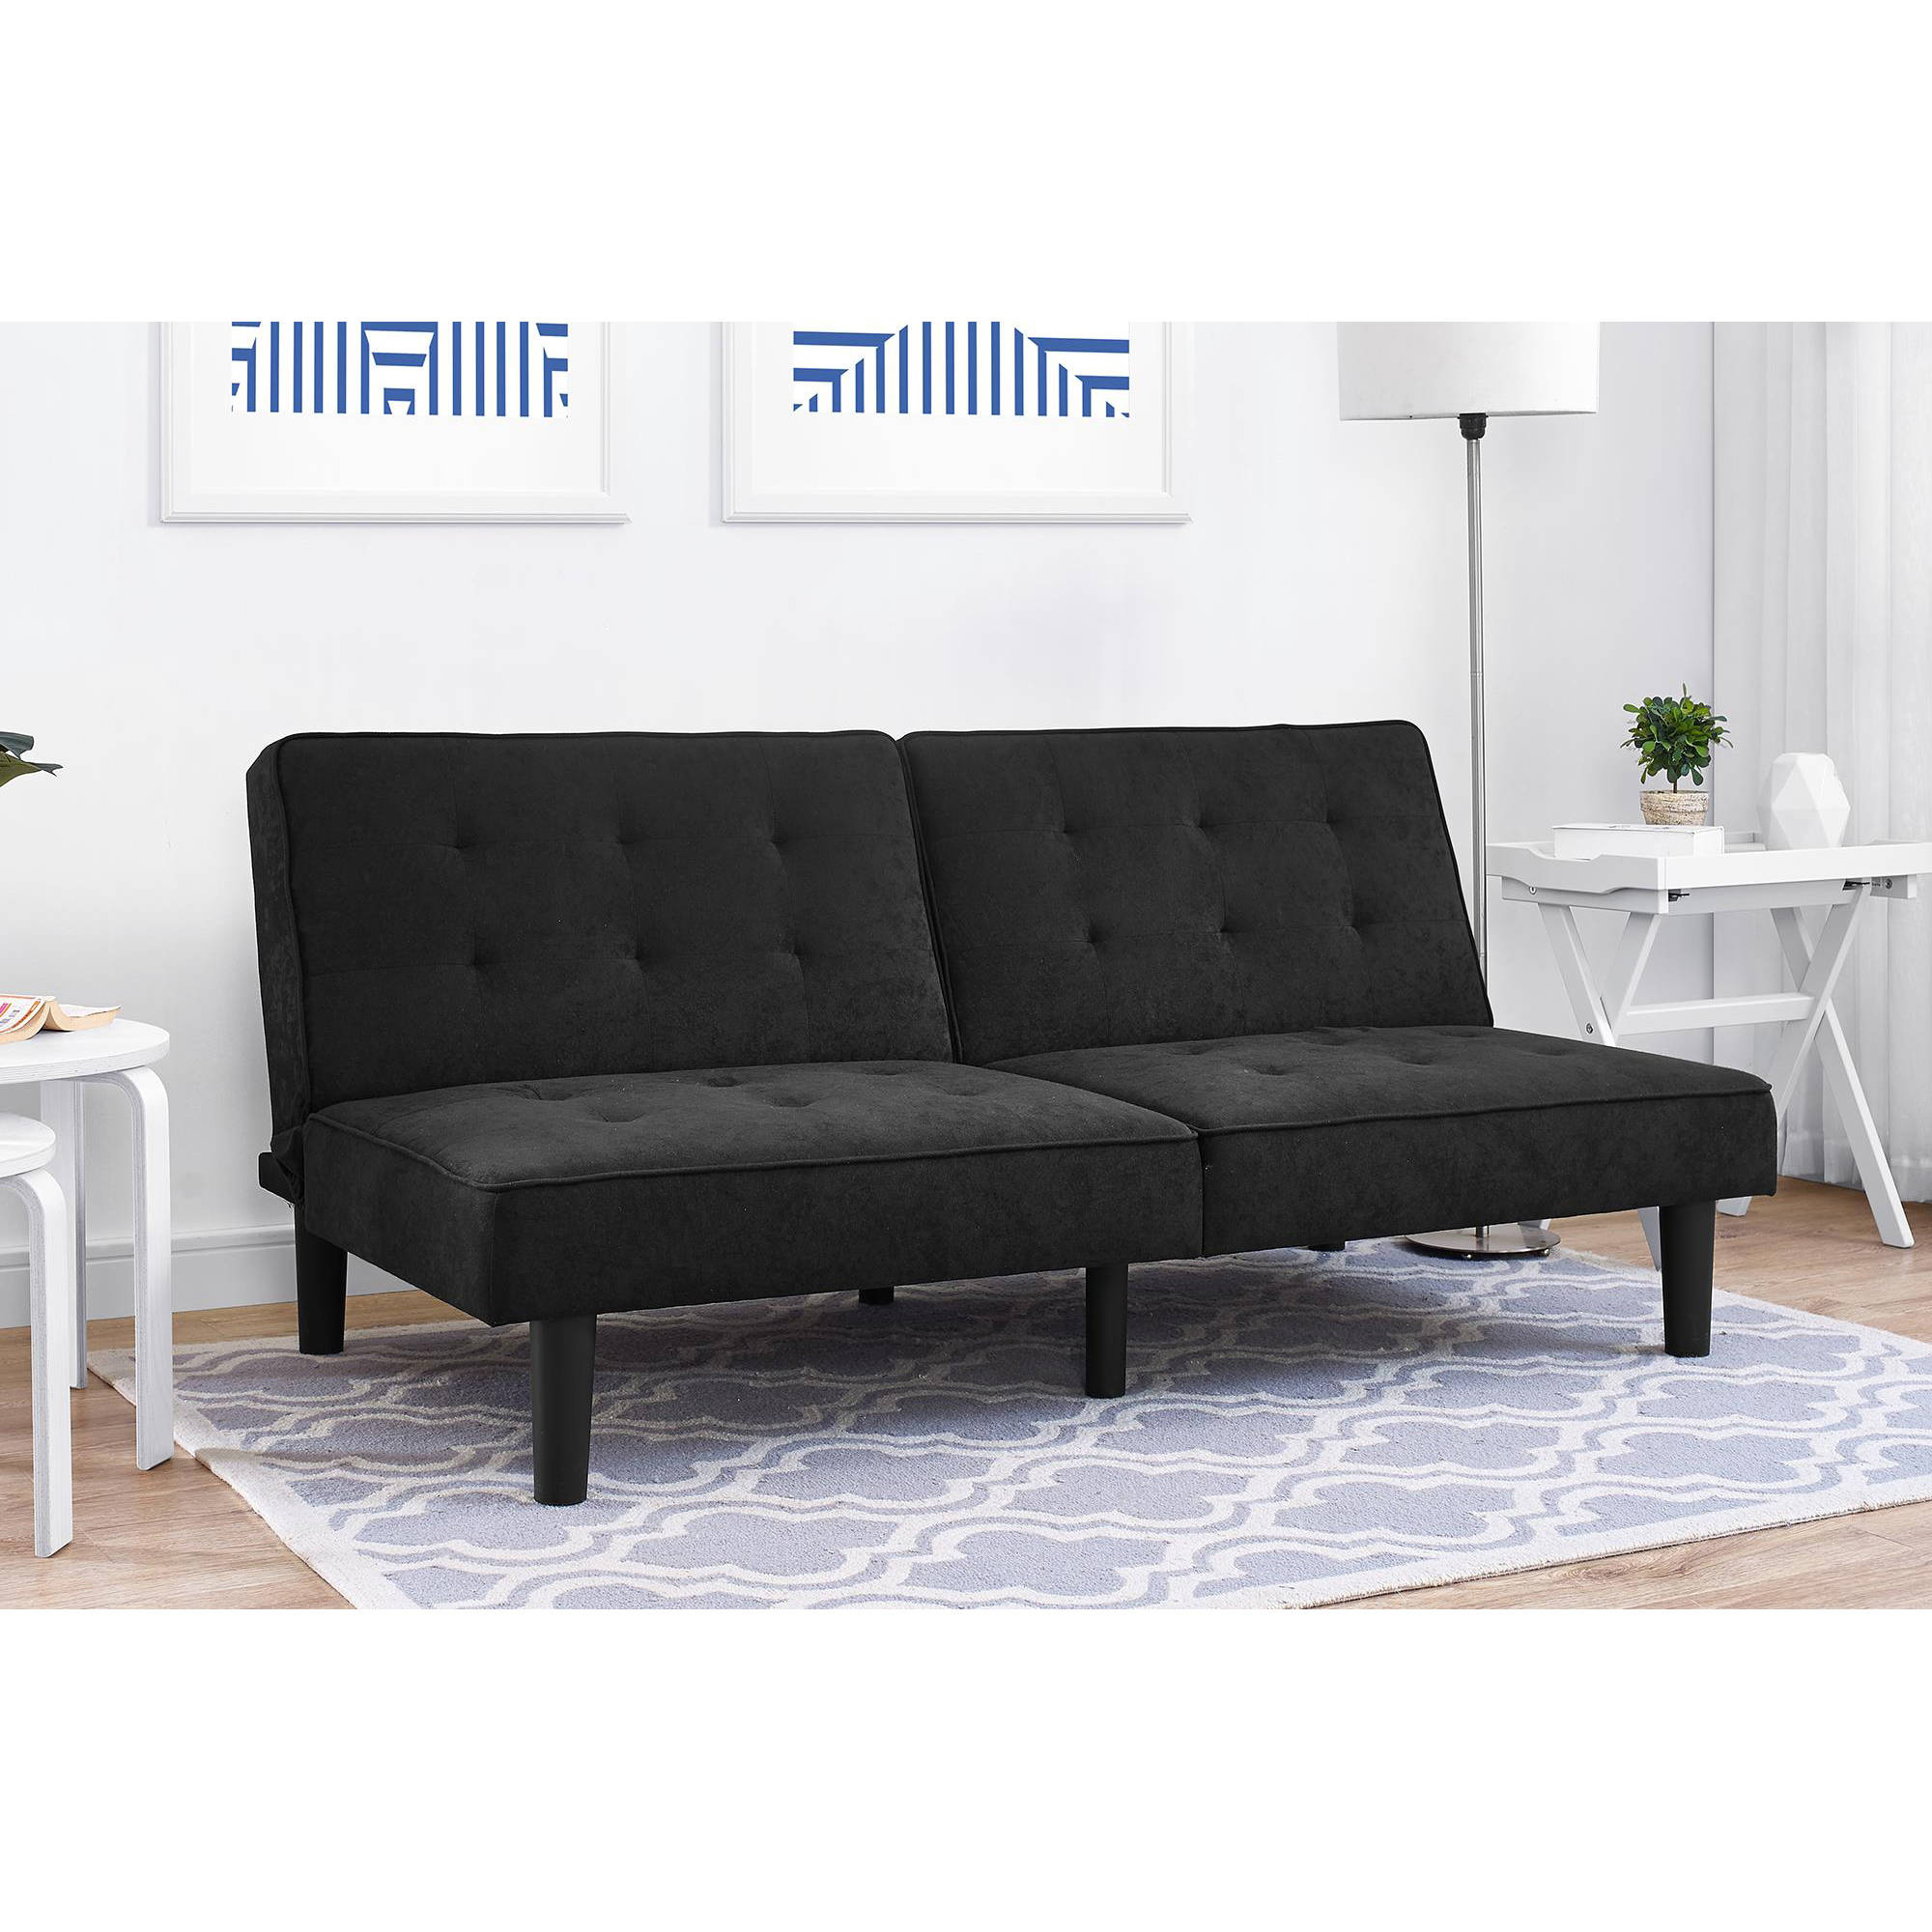 Price drop! Mainstays Arlo futon for $100